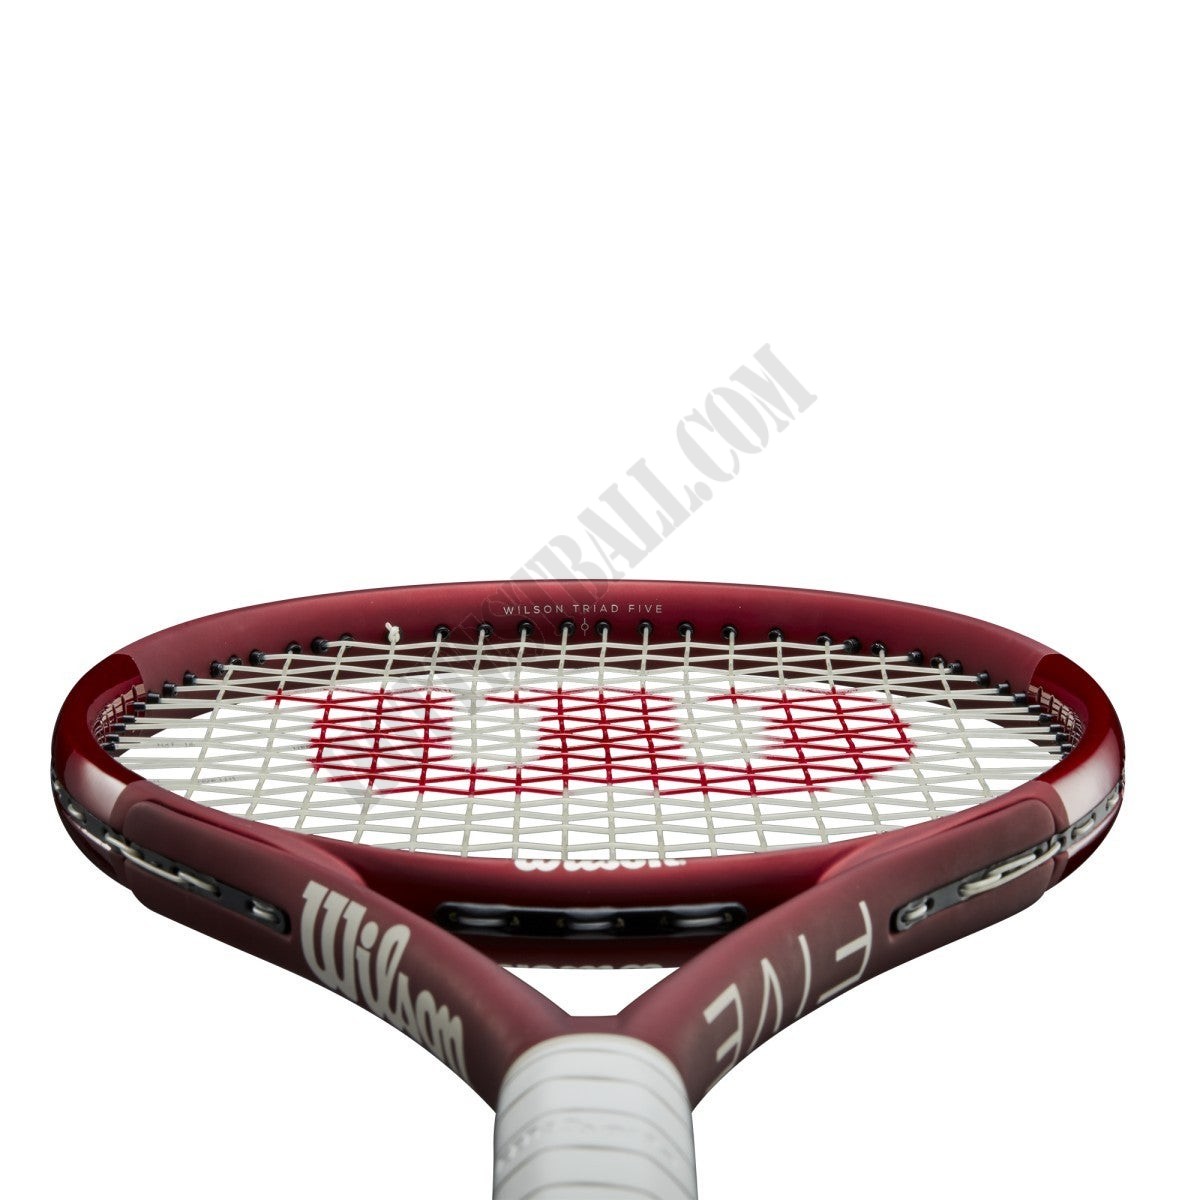 Triad Five Tennis Racket - Wilson Discount Store - -3